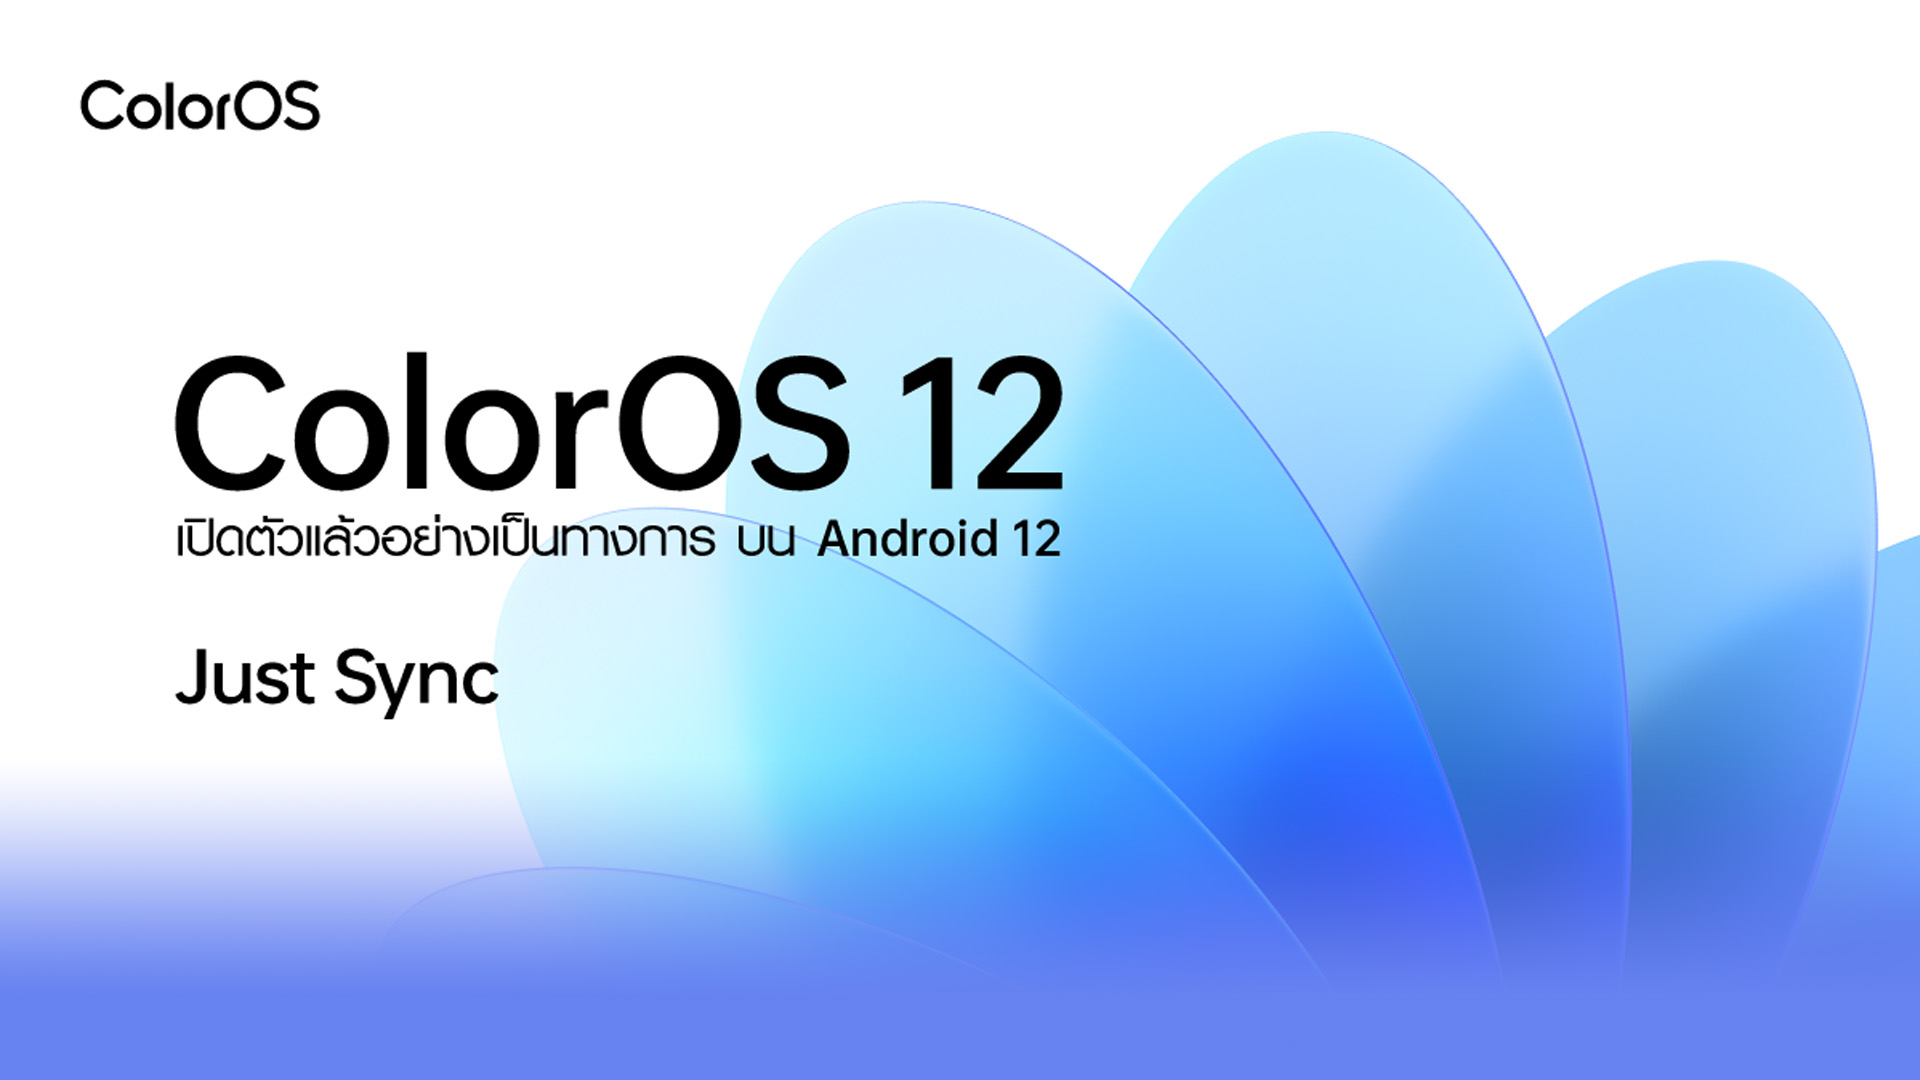 OPPO เปิดตัว ColorOS 12 Global Version อย่างเป็นทางการ ColorOS ใหม่บน Android 12